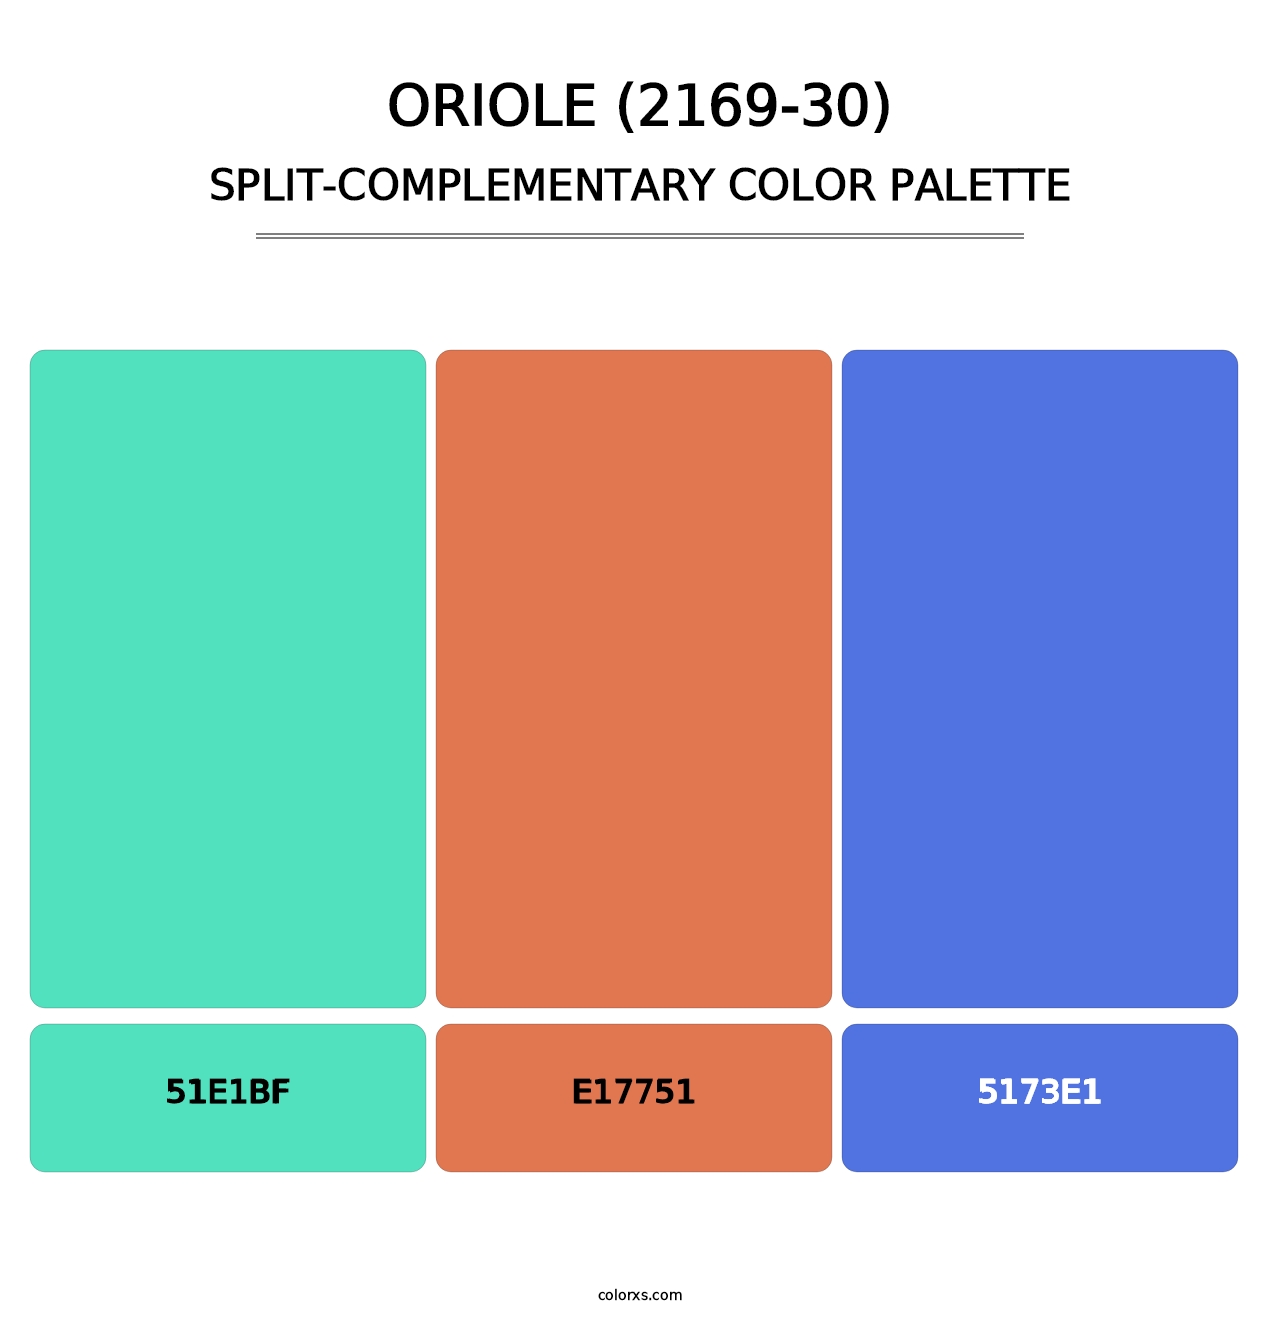 Oriole (2169-30) - Split-Complementary Color Palette